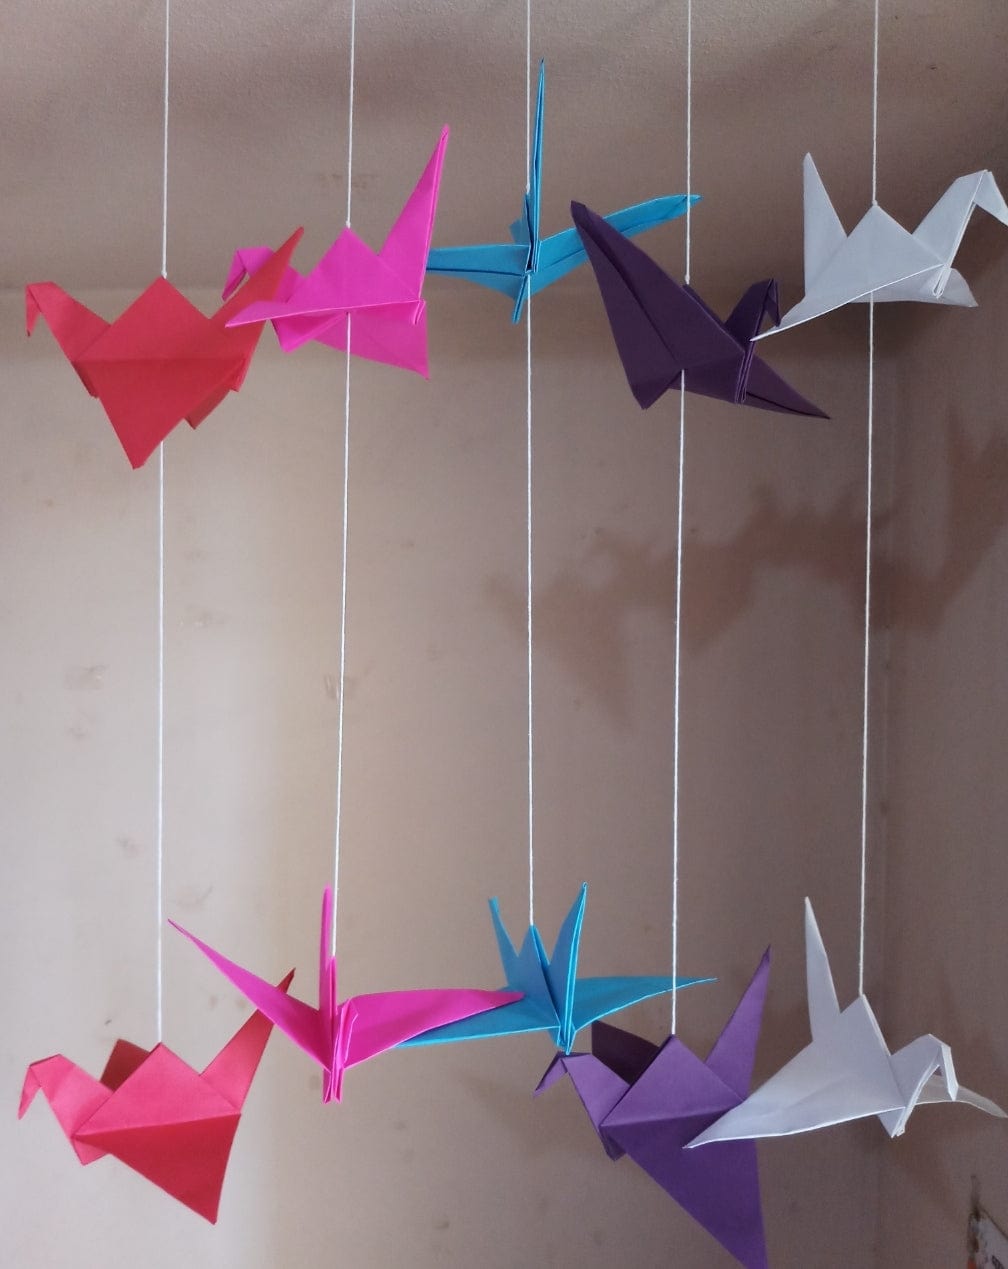 Lamansh LAMANSH® (5 feet) Pack of 10 Paper Peacock Bird origami hangings for backdrops / Decorative paper hangings for birthday & party celebration